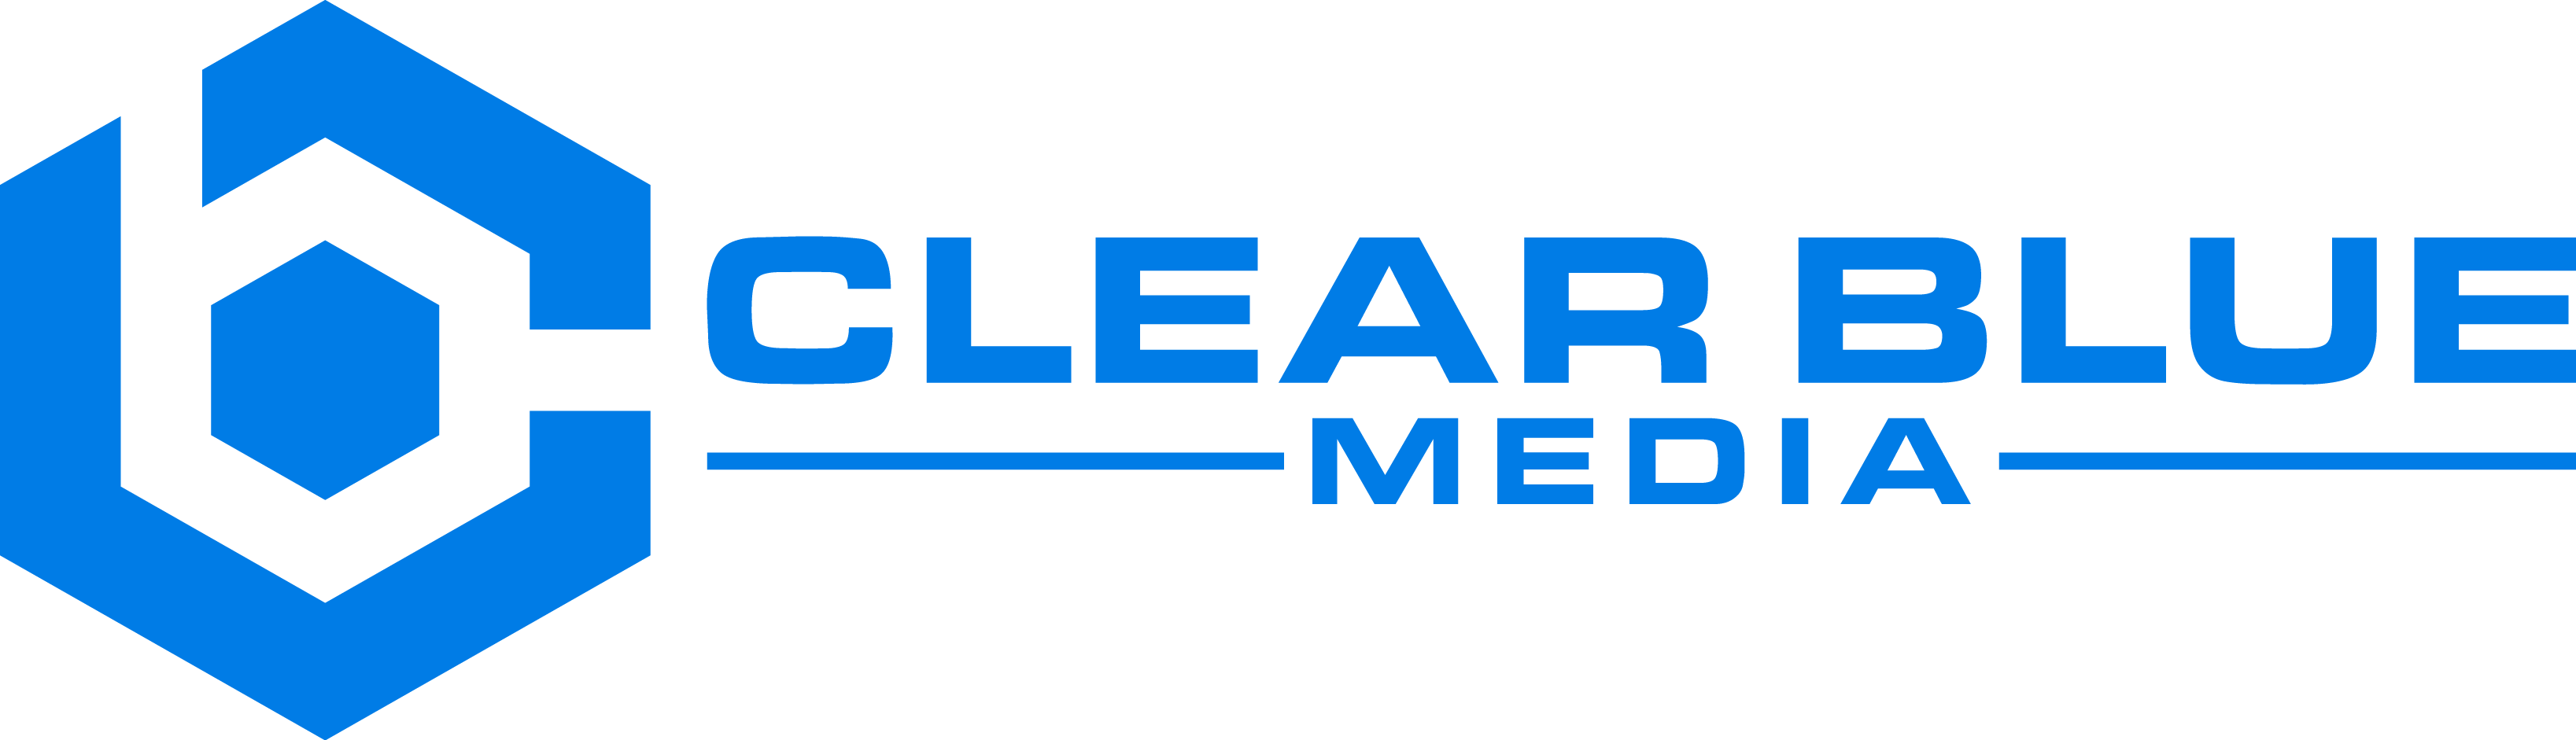 Clear Blue Logo - Clear Blue Media || clearbluemedia.com